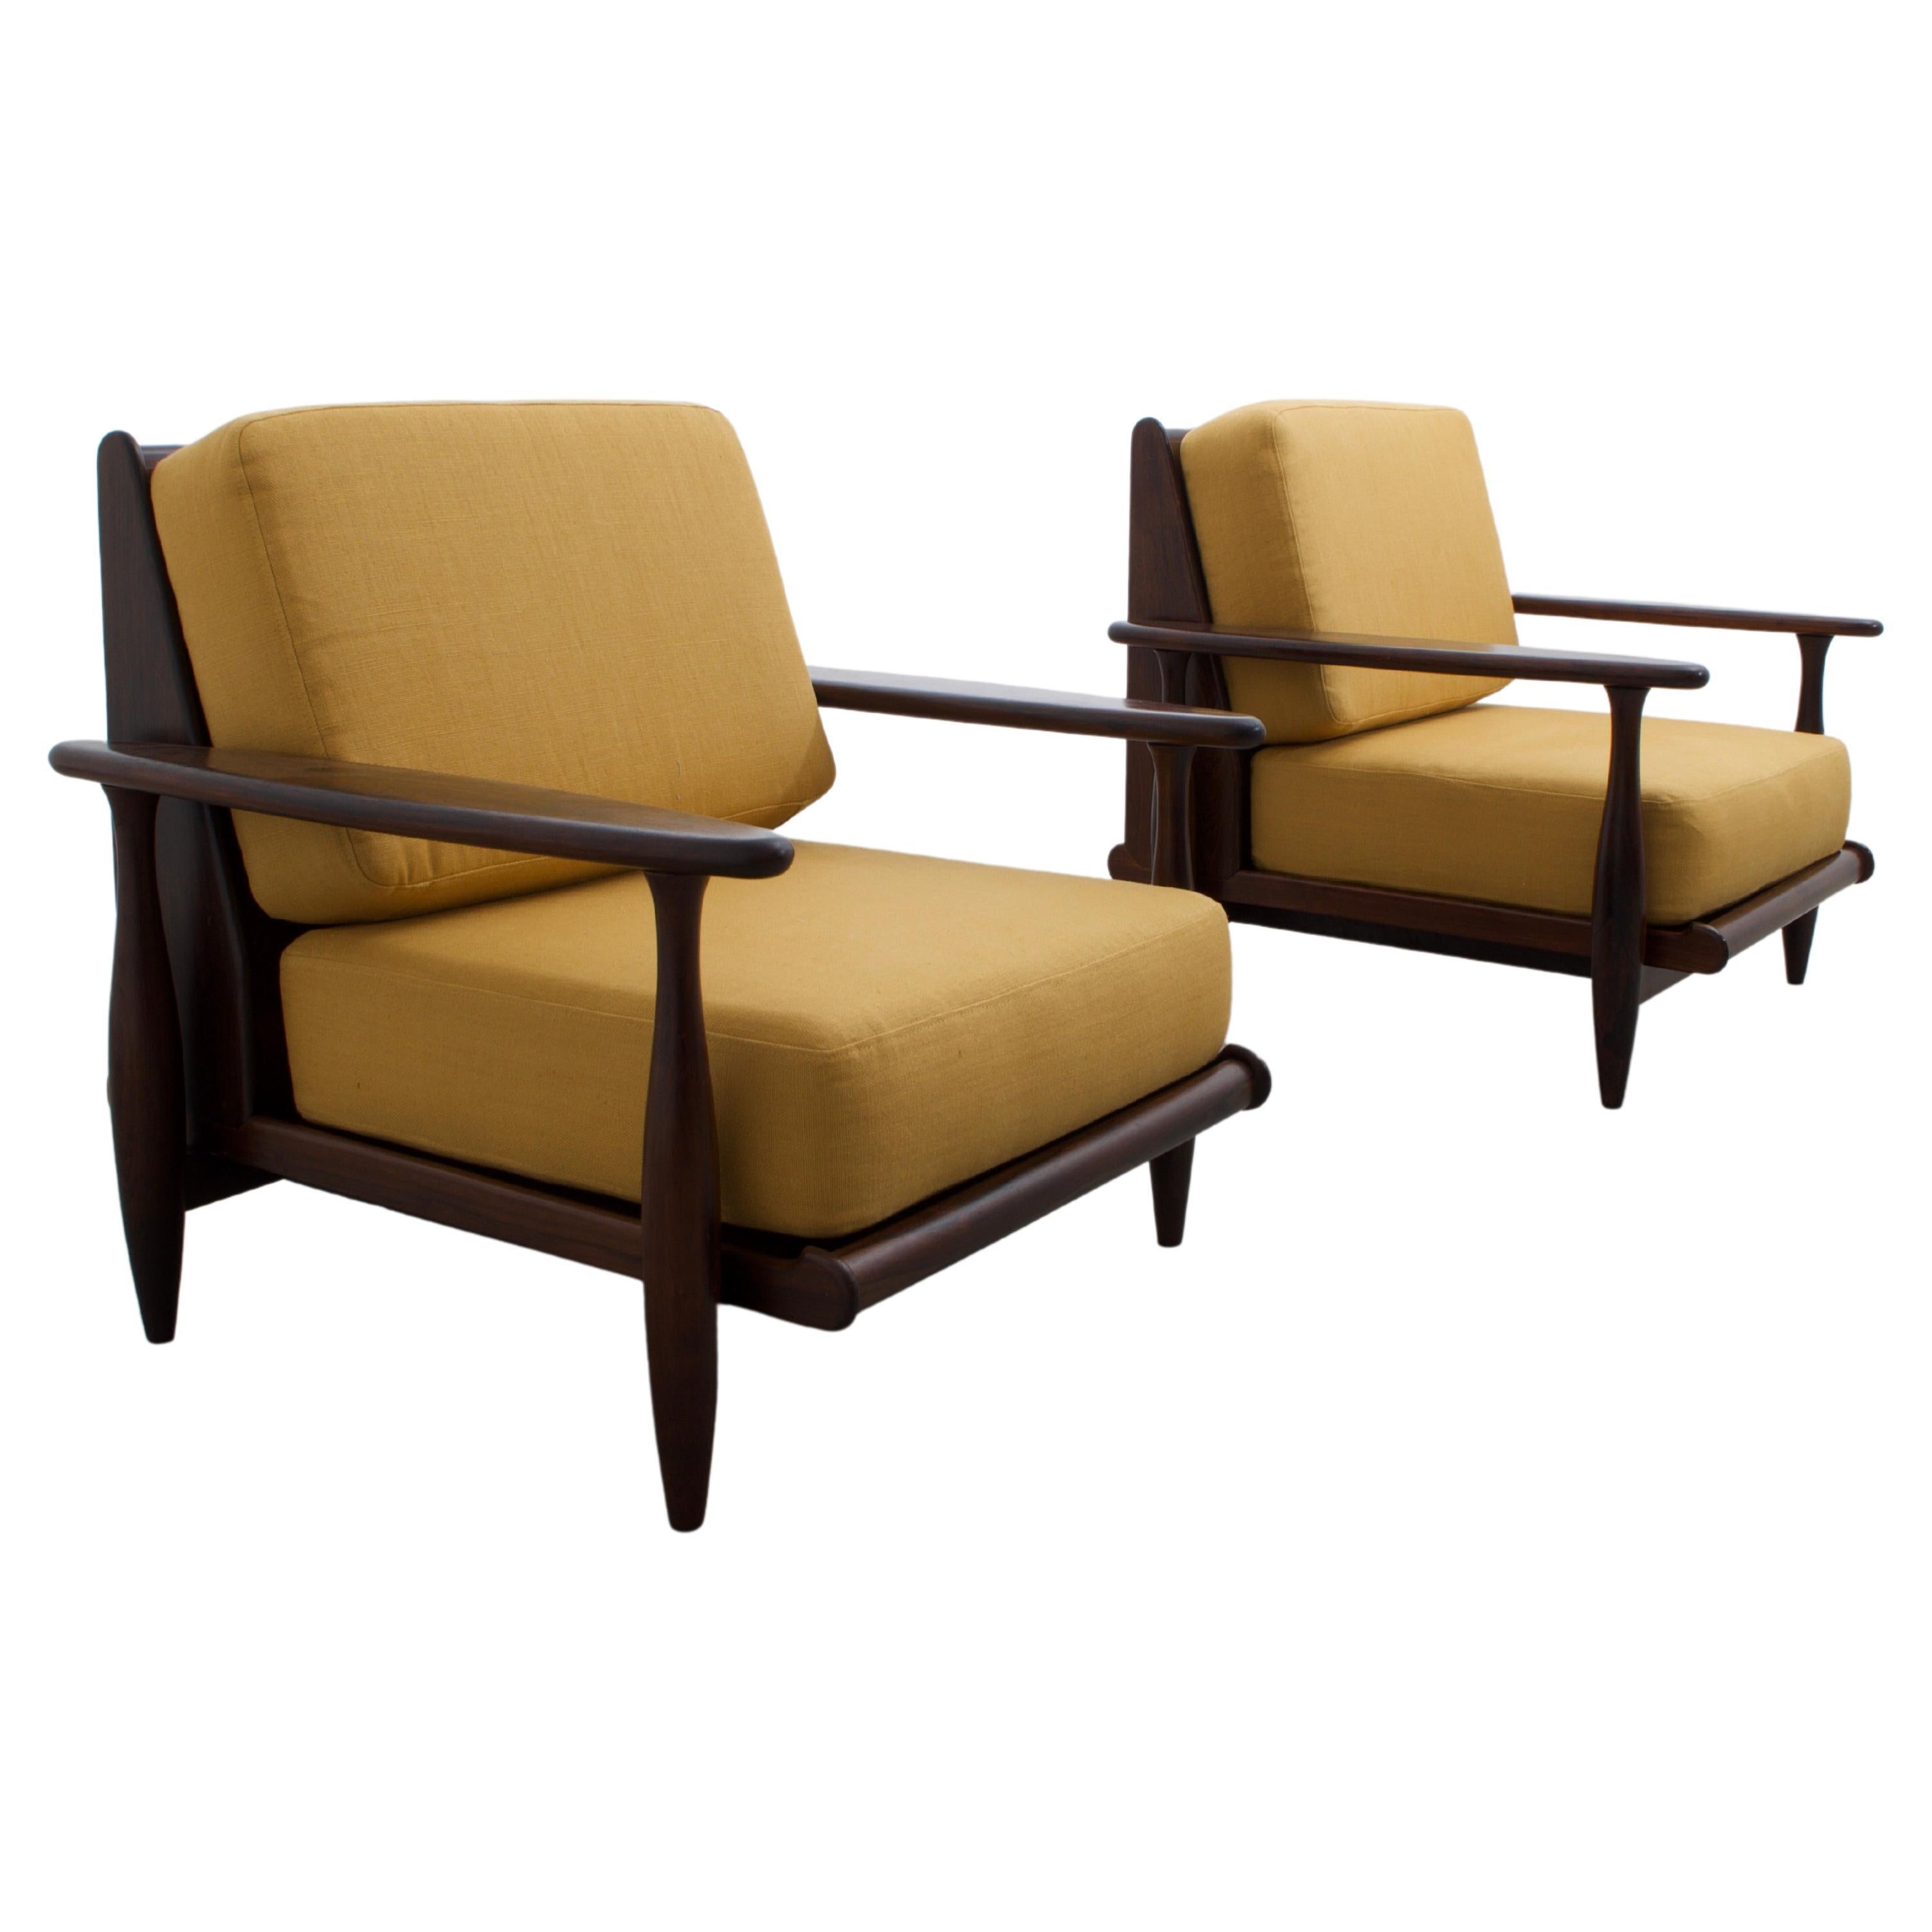 Pair of Lounge Chairs by Liceu de Artes e Ofícios, 1960's, Brazilian Mid-Century